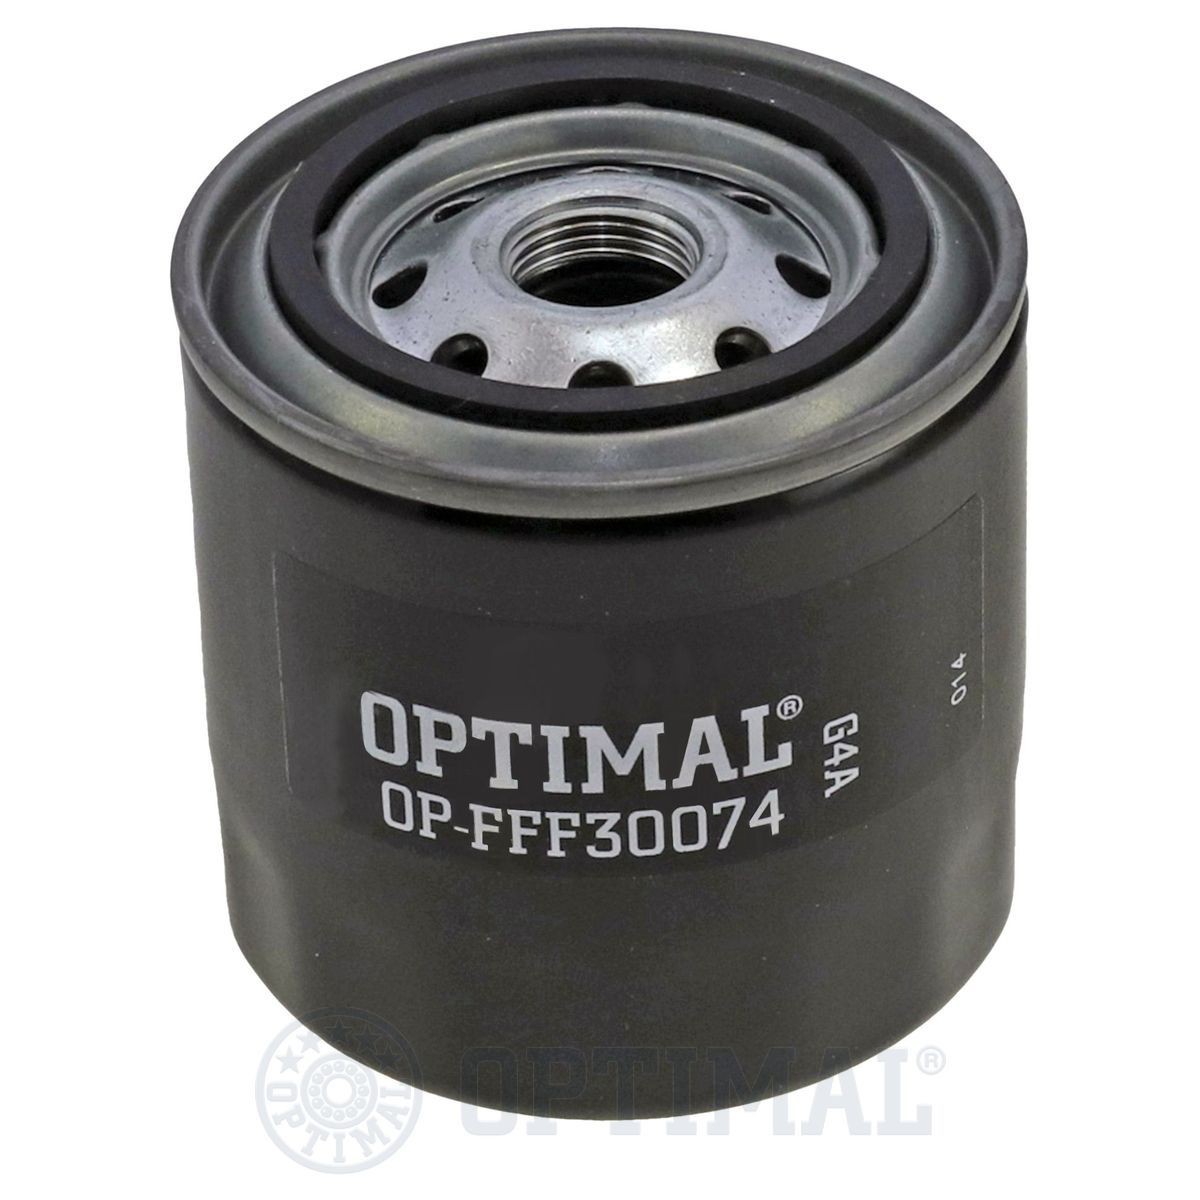 OPTIMAL OP-FFF30074 Fuel filter 282203 A 1